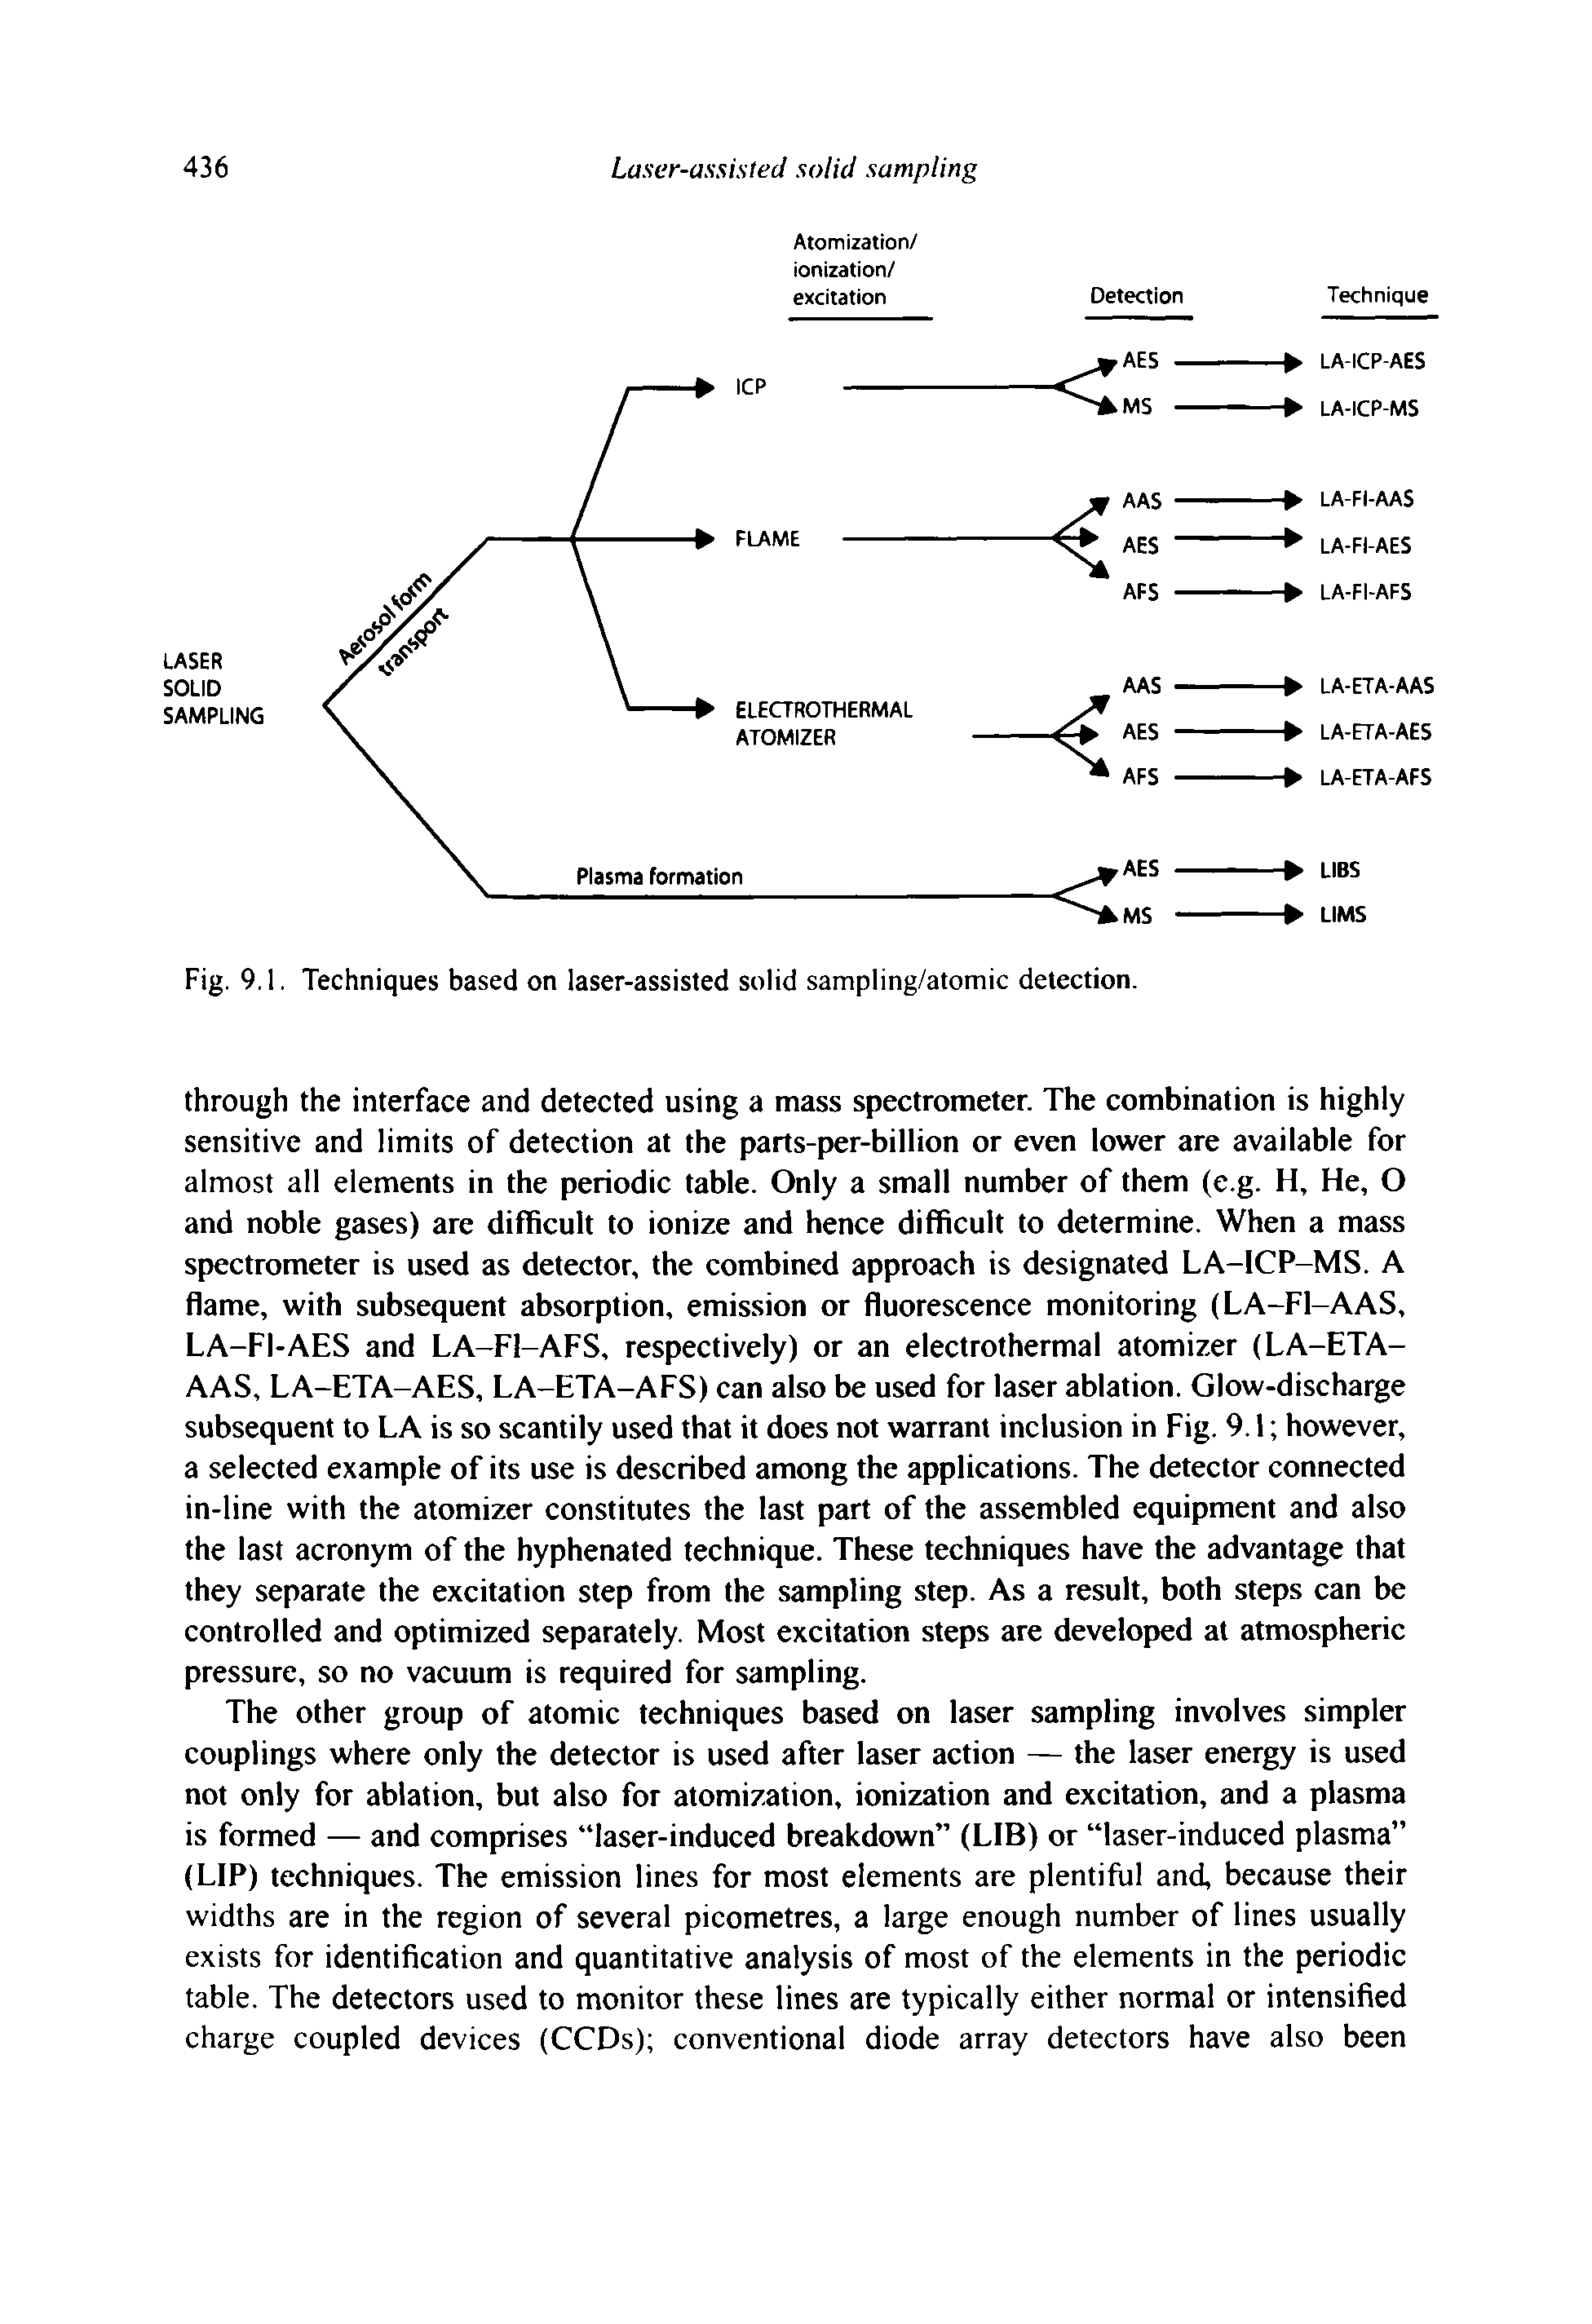 Fig. 9,1, Techniques based on laser-assisted solid sampling/atomic detection.